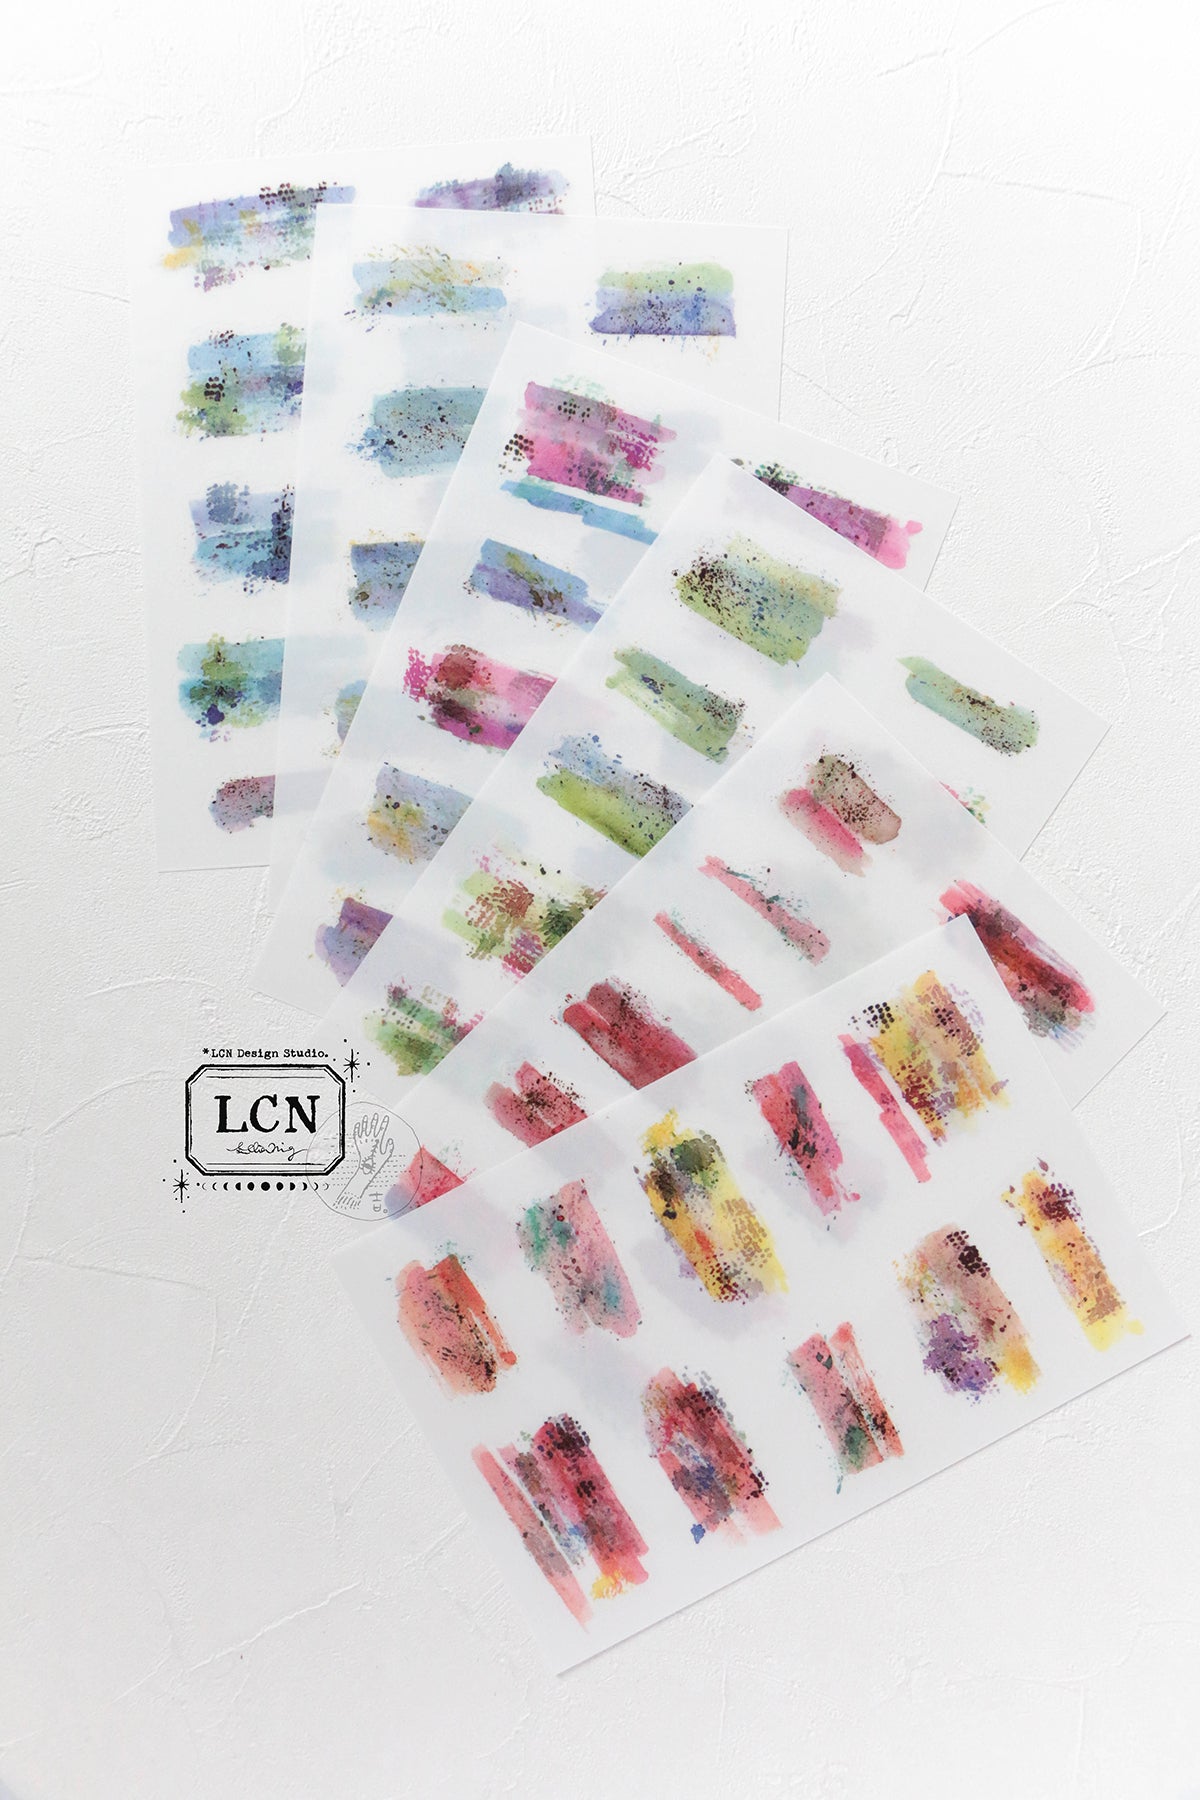 LCN Design Studio: Brush Paint Print On Stickers